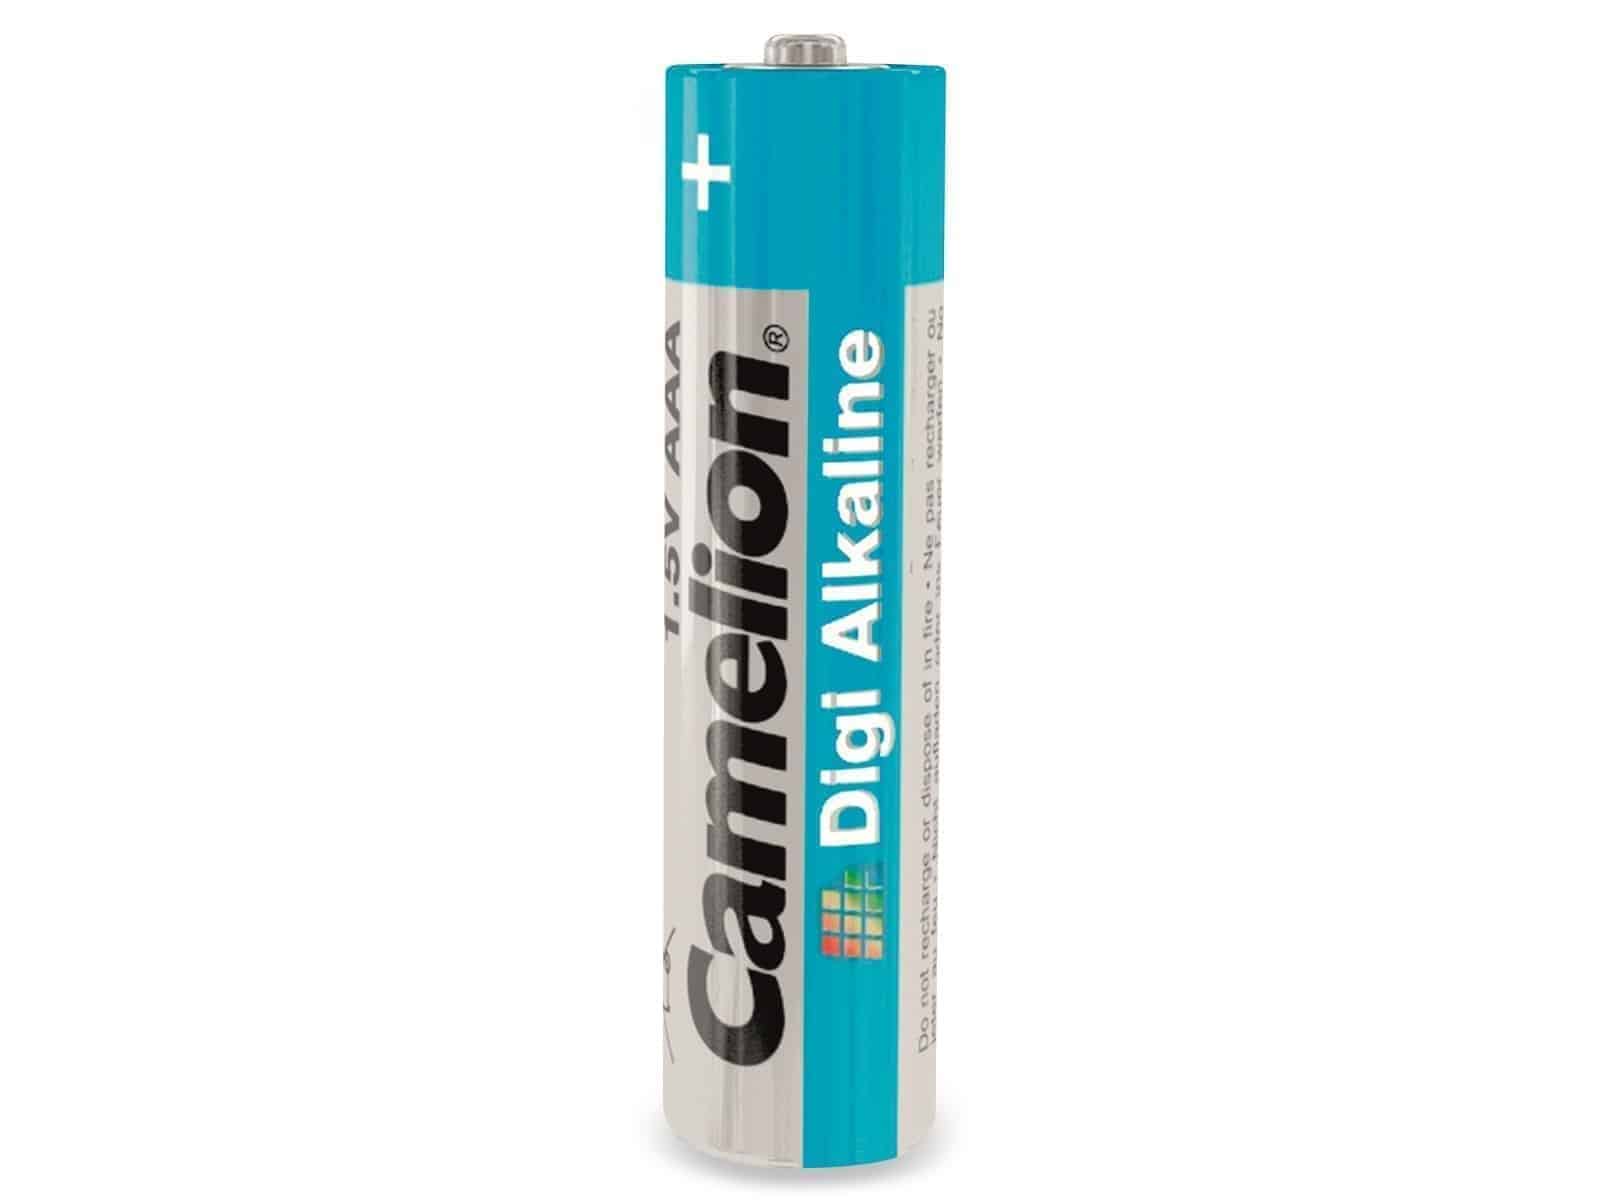 CAMELION Micro-Batterie, Digi-Alkaline, LR03, 4 Stück